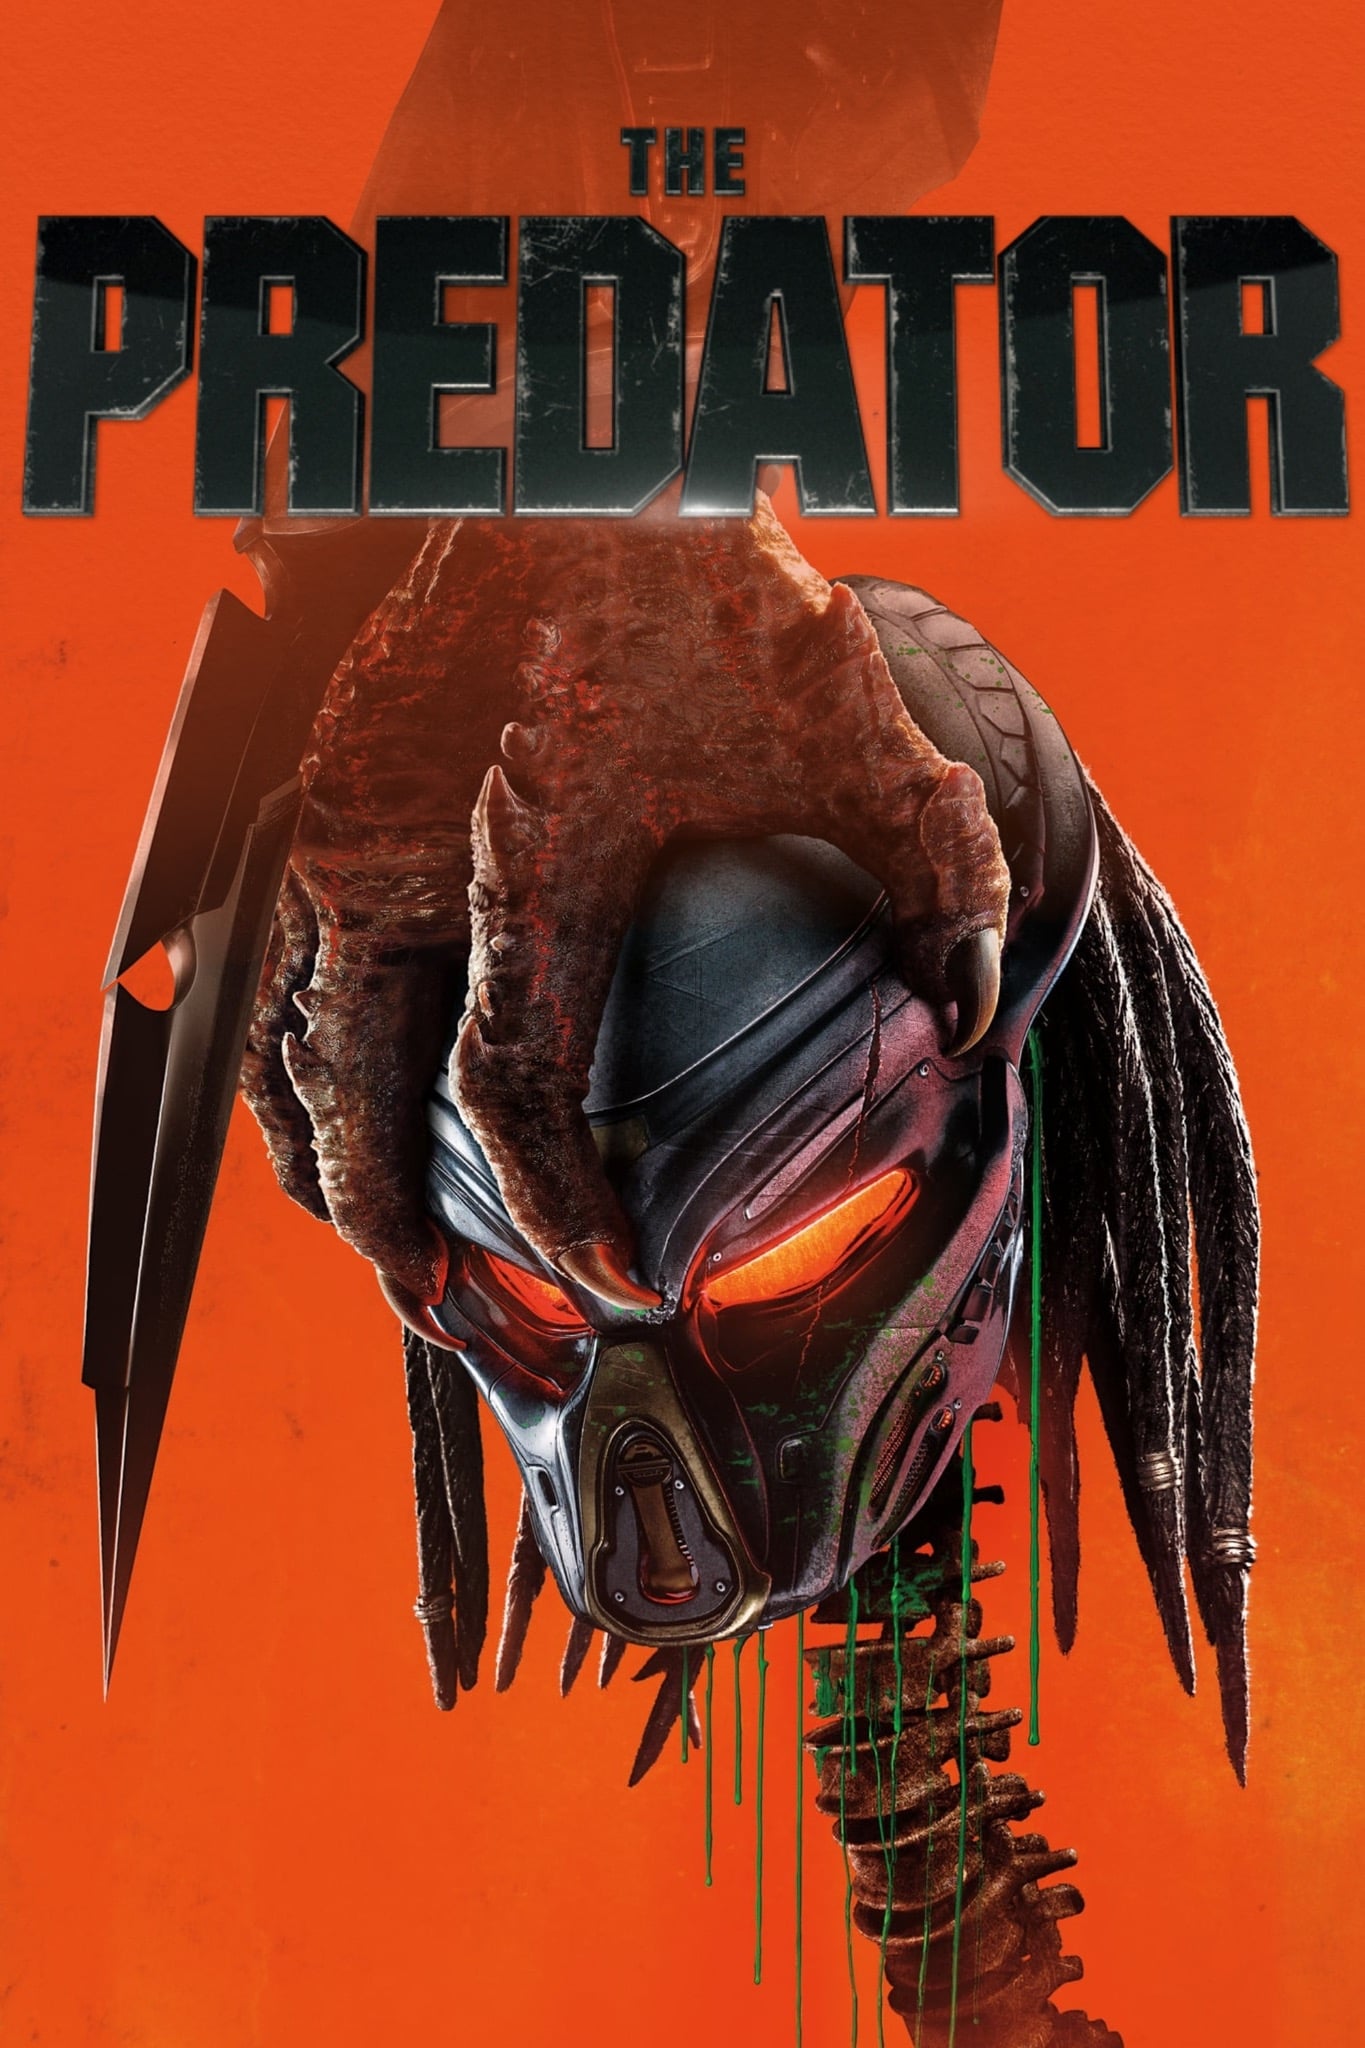 The Predator 2018 Free Full Movie Download Torrent - universityrenew